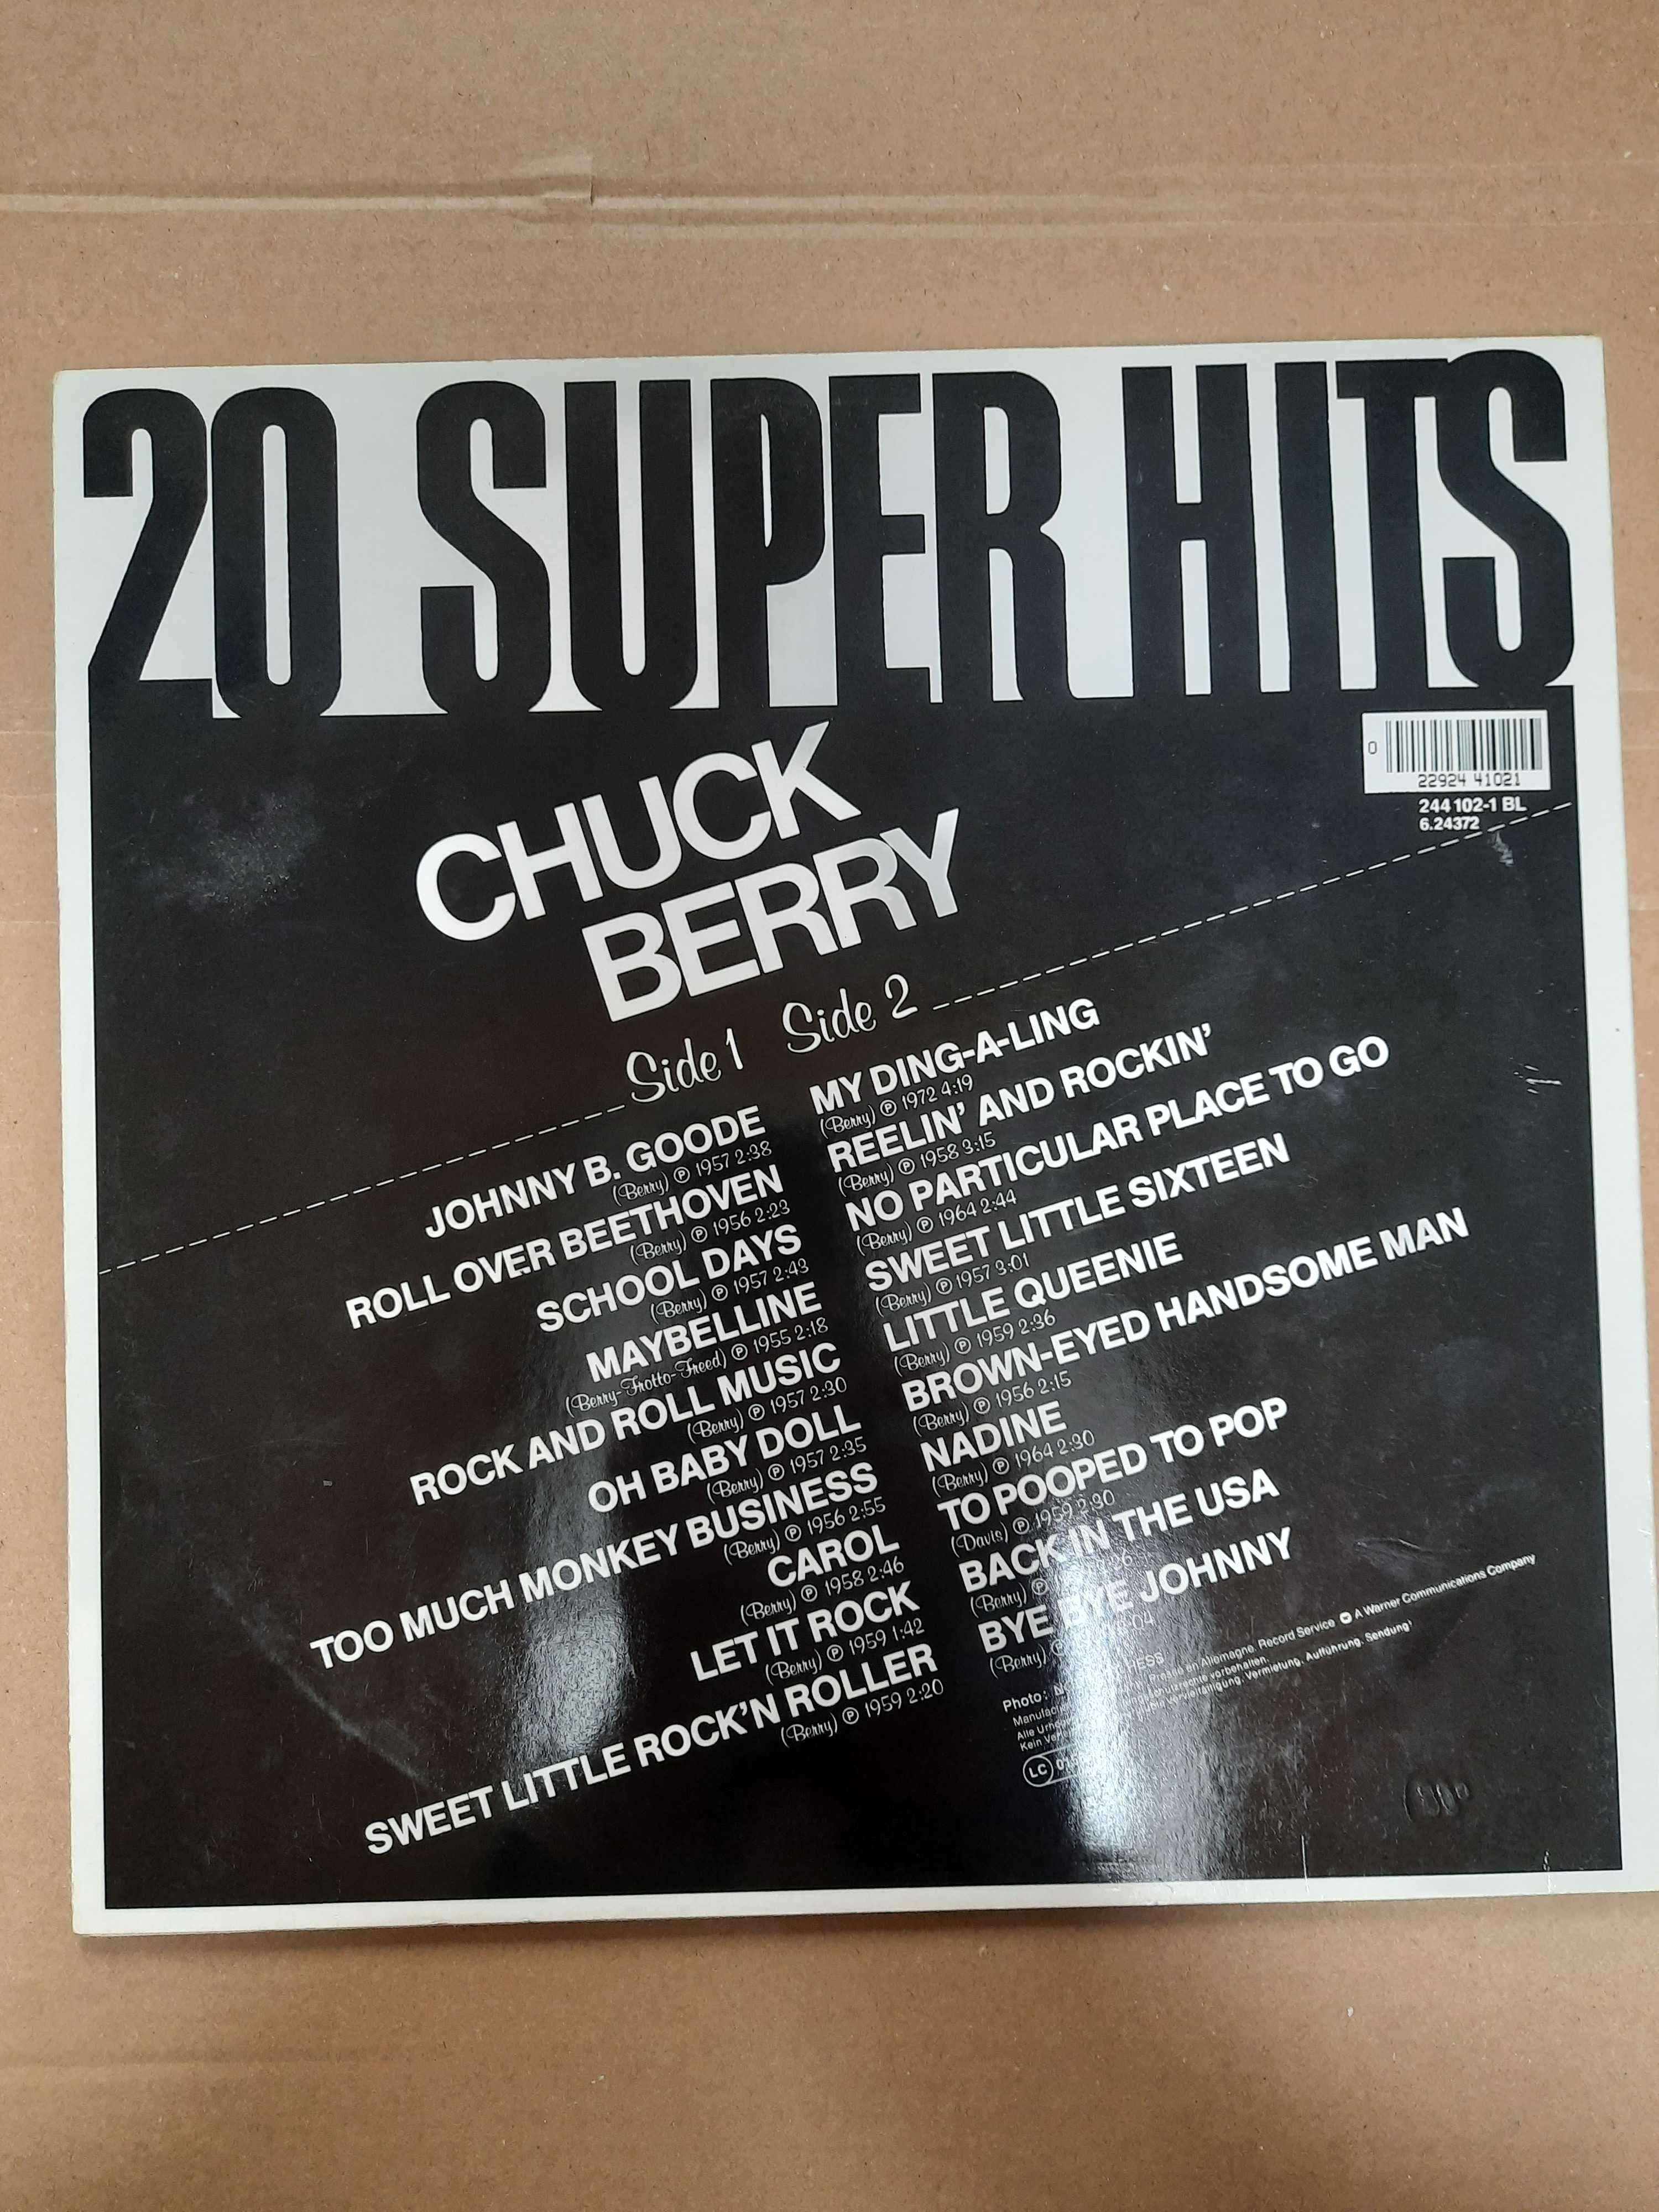 Płyta winylowa - Chuck Berry - 20 Super Hits, 1980 r.